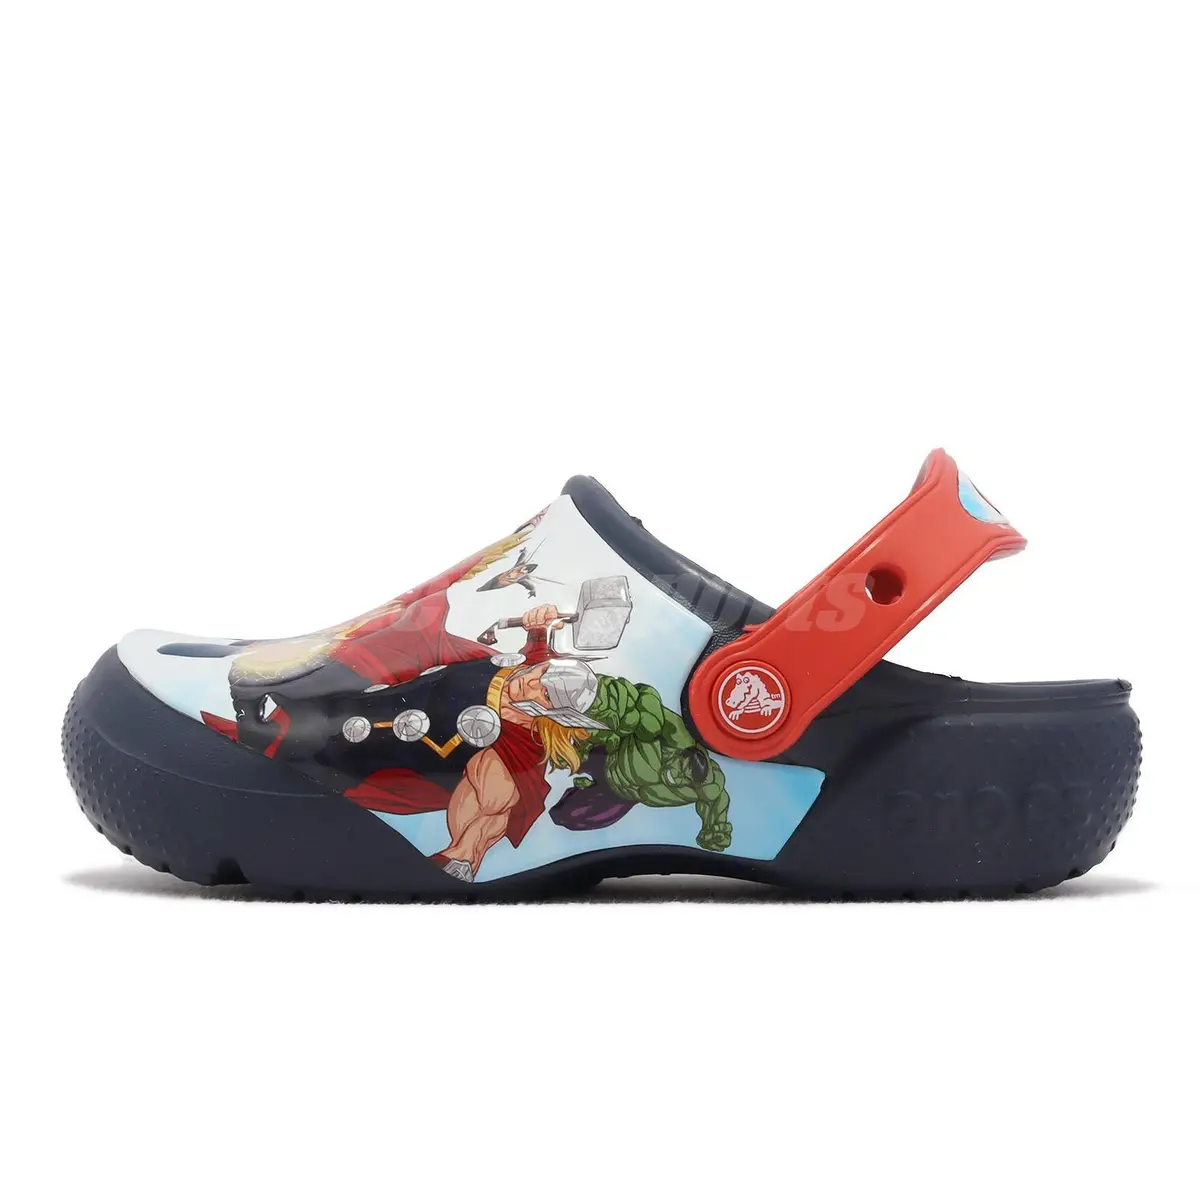 Kids 207069-410 Crocs Patch Clog Shoes Preschool Fun Avengers eBay | K Sandals Lab Navy